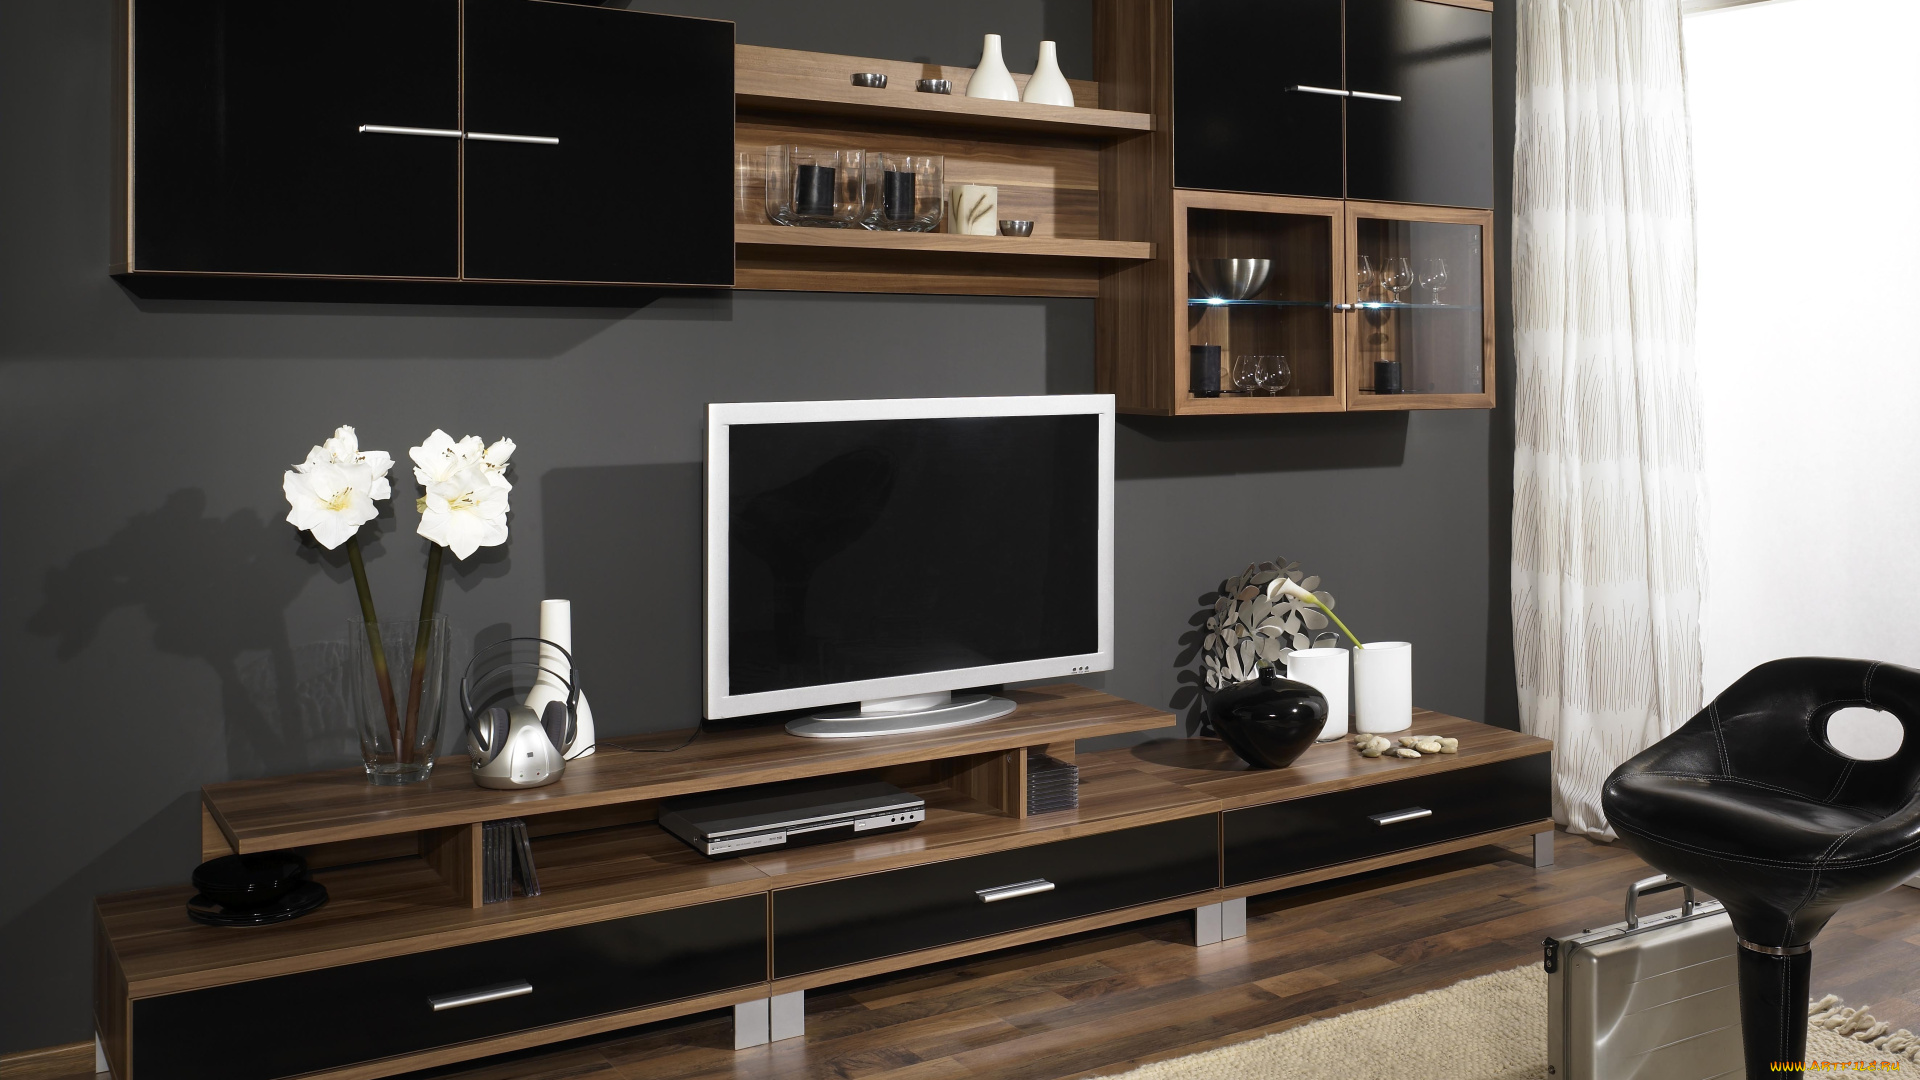 интерьер, гостиная, дерево, коричневый, телевизор, стенка, дизайн, комната, мебель, шкаф